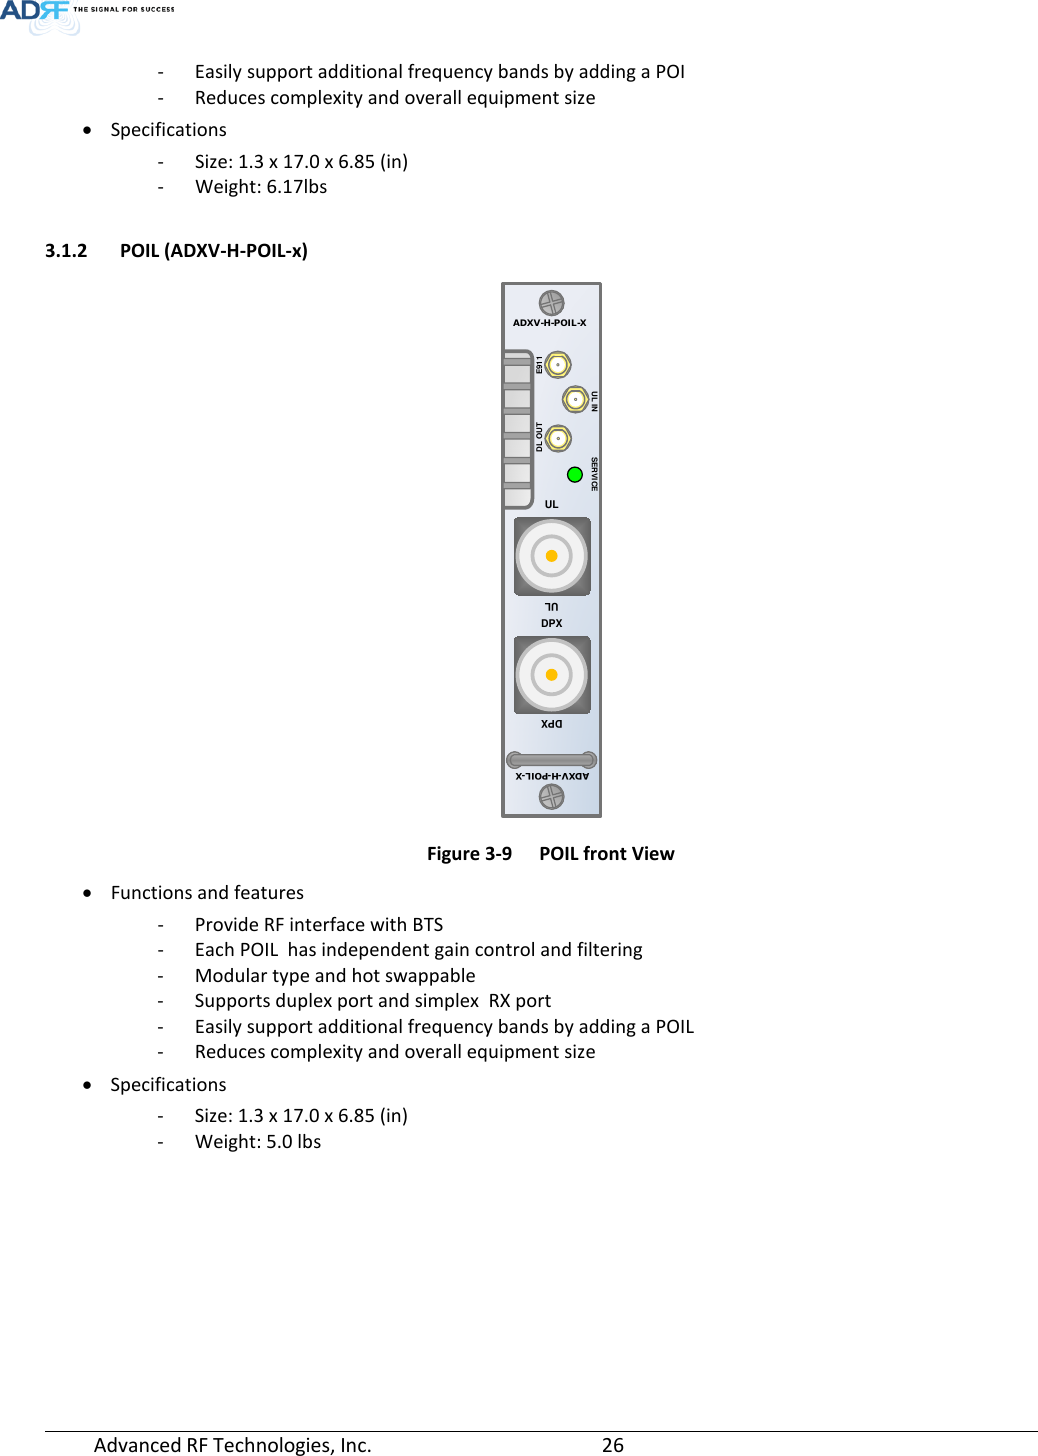 Page 26 of ADRF KOREA ADXV-R-78P-NA DAS (Distributed Antenna System) User Manual ADXV DAS